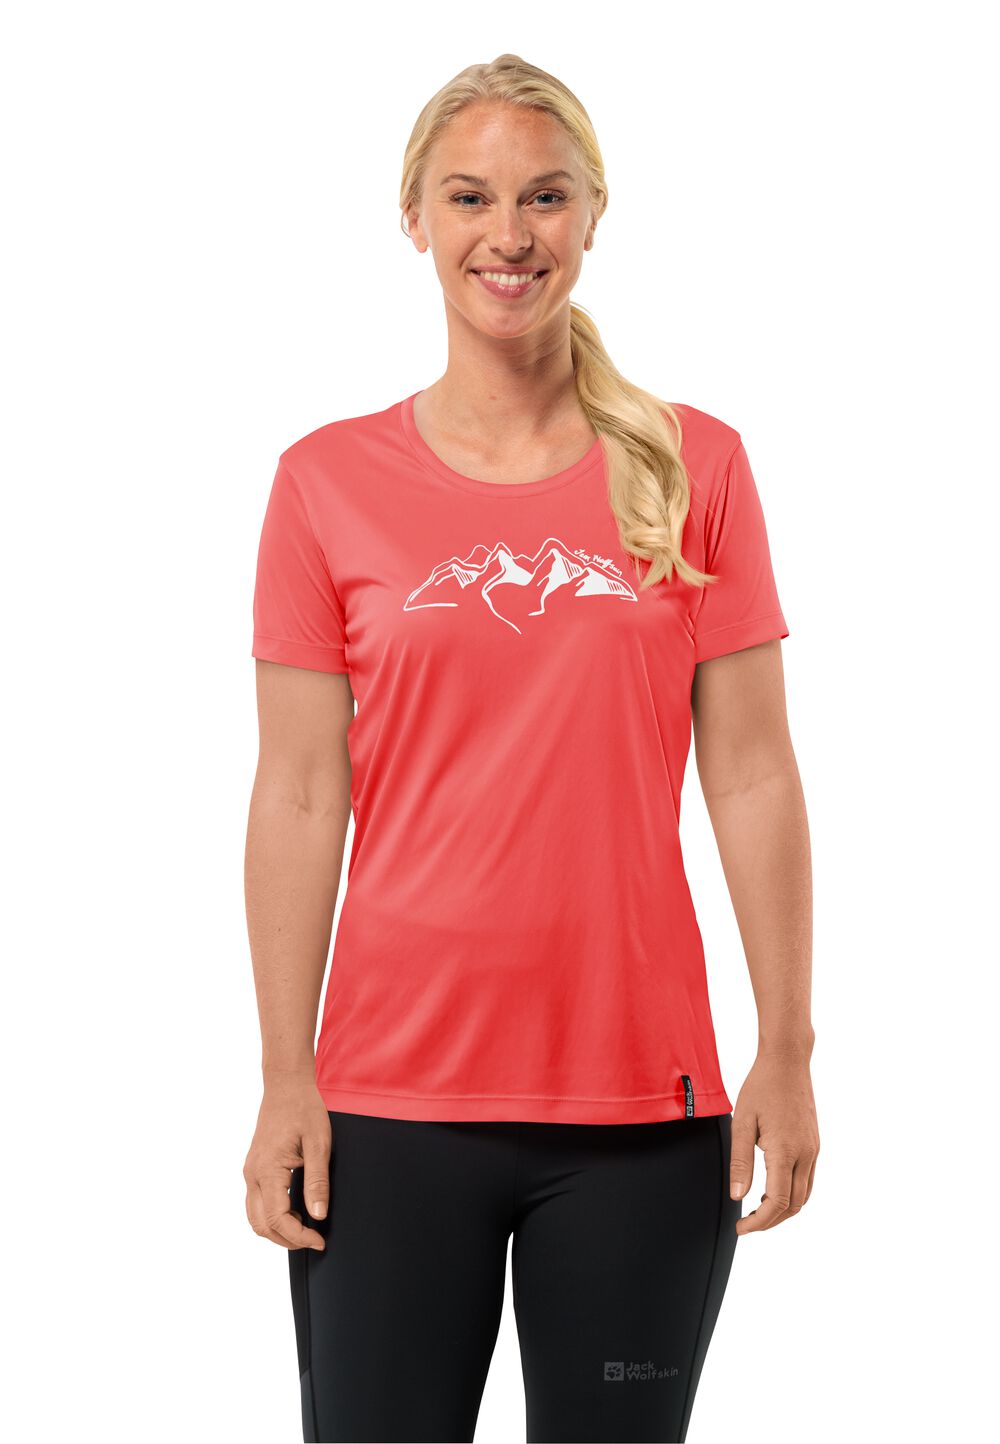 Jack Wolfskin Peak Graphic T-Shirt Women Functioneel shirt Dames L rood vibrant red